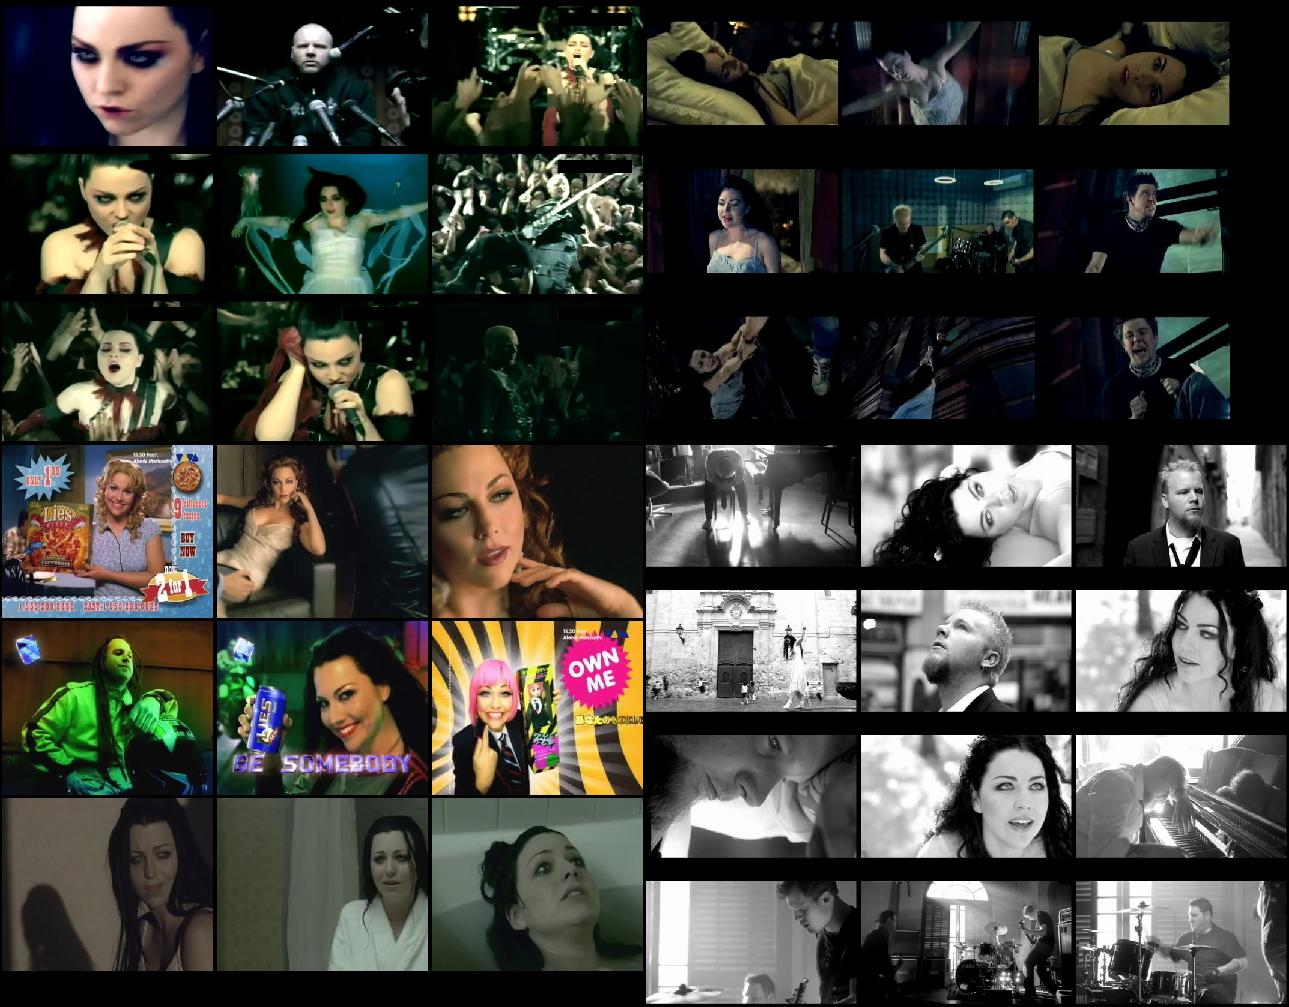 Evanescence 4 music videos by ILD